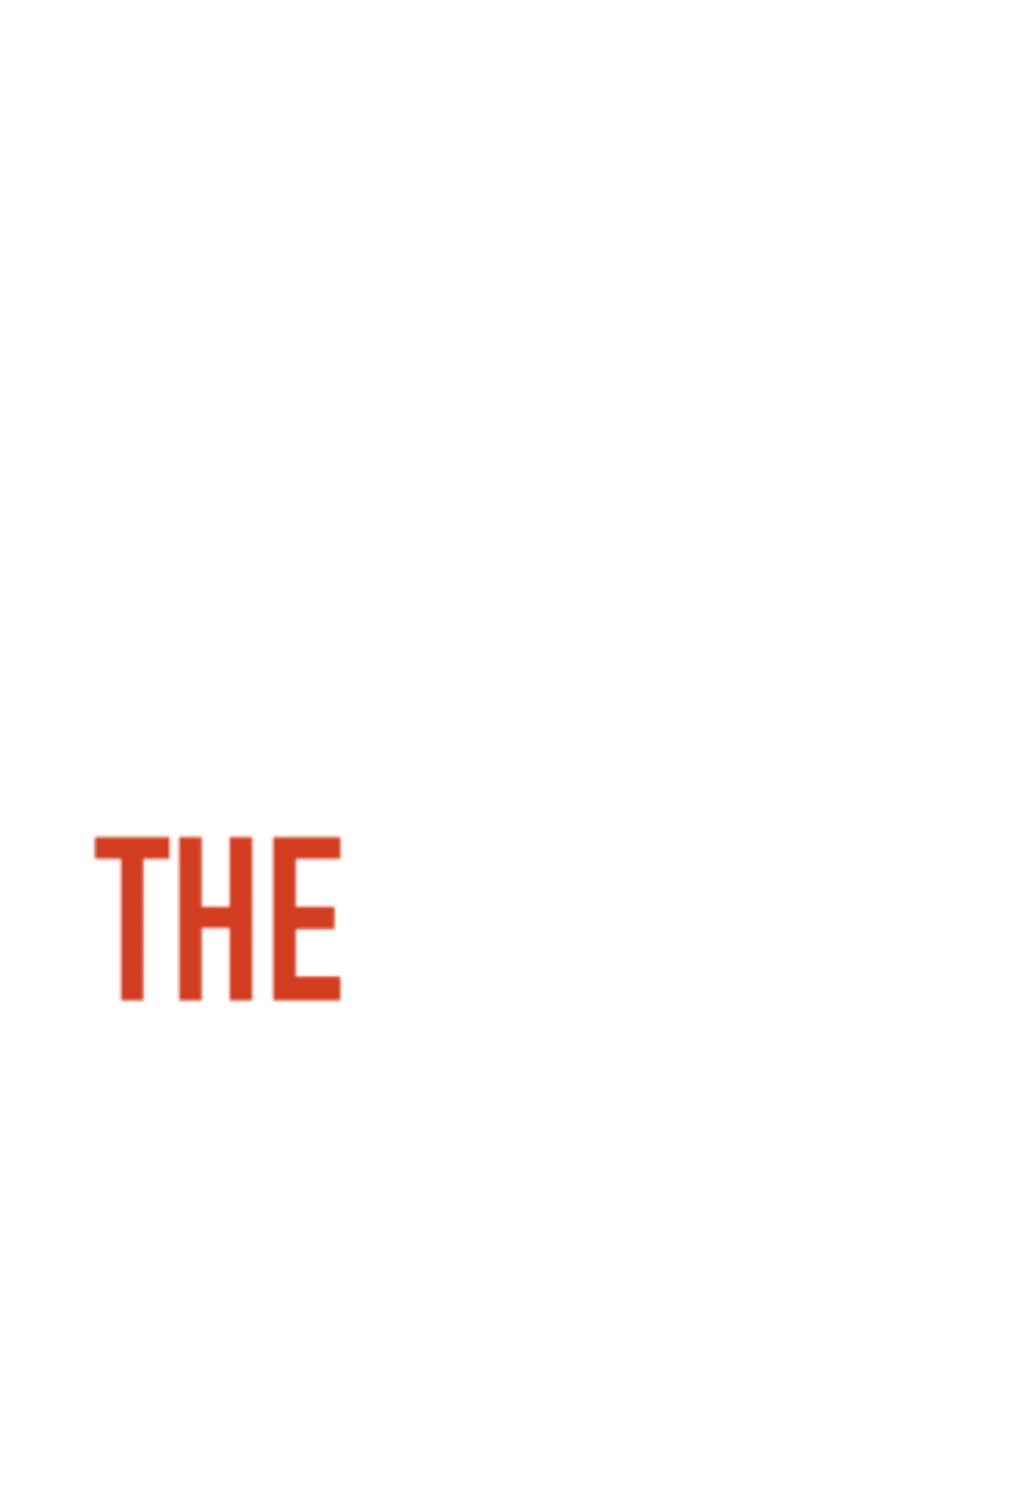 I want to _ the stroke nera